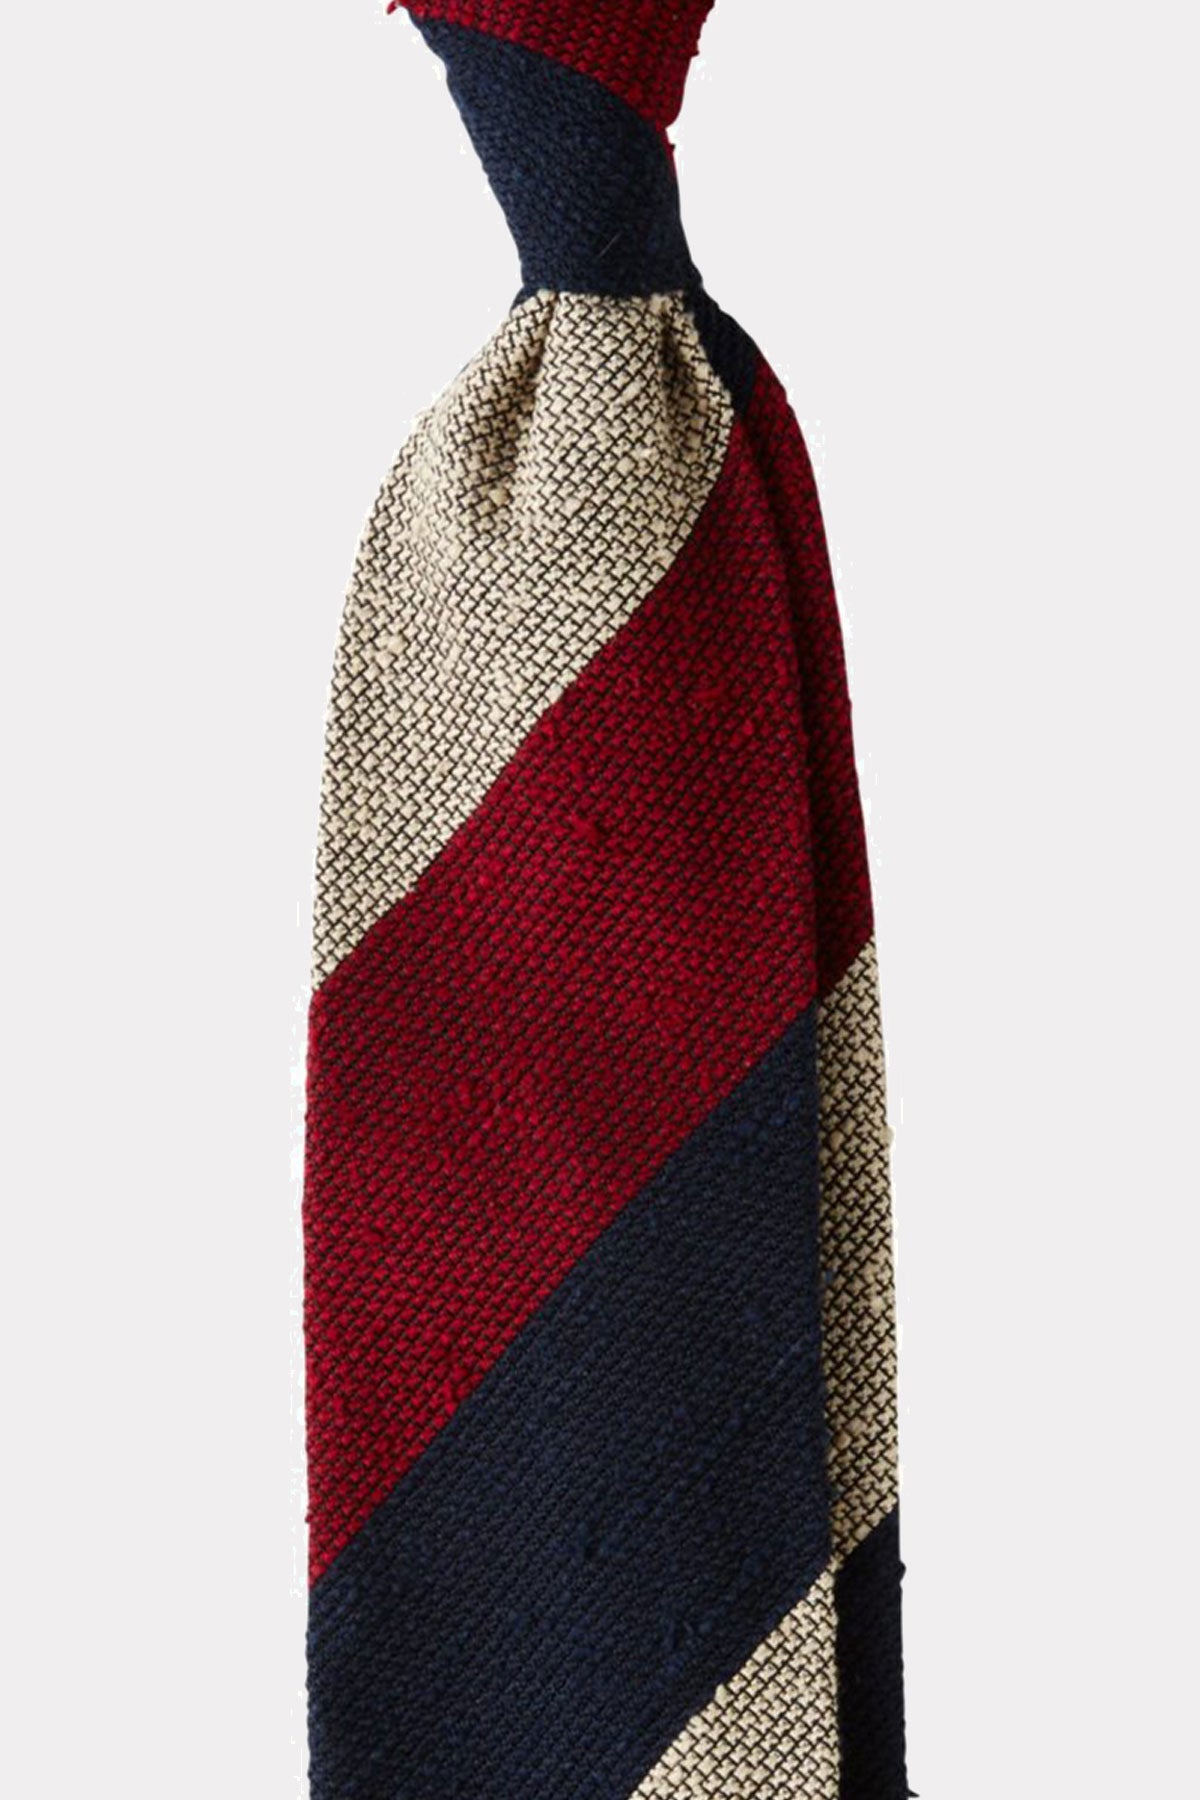 Krawatte in navy-rot-beige gestreift